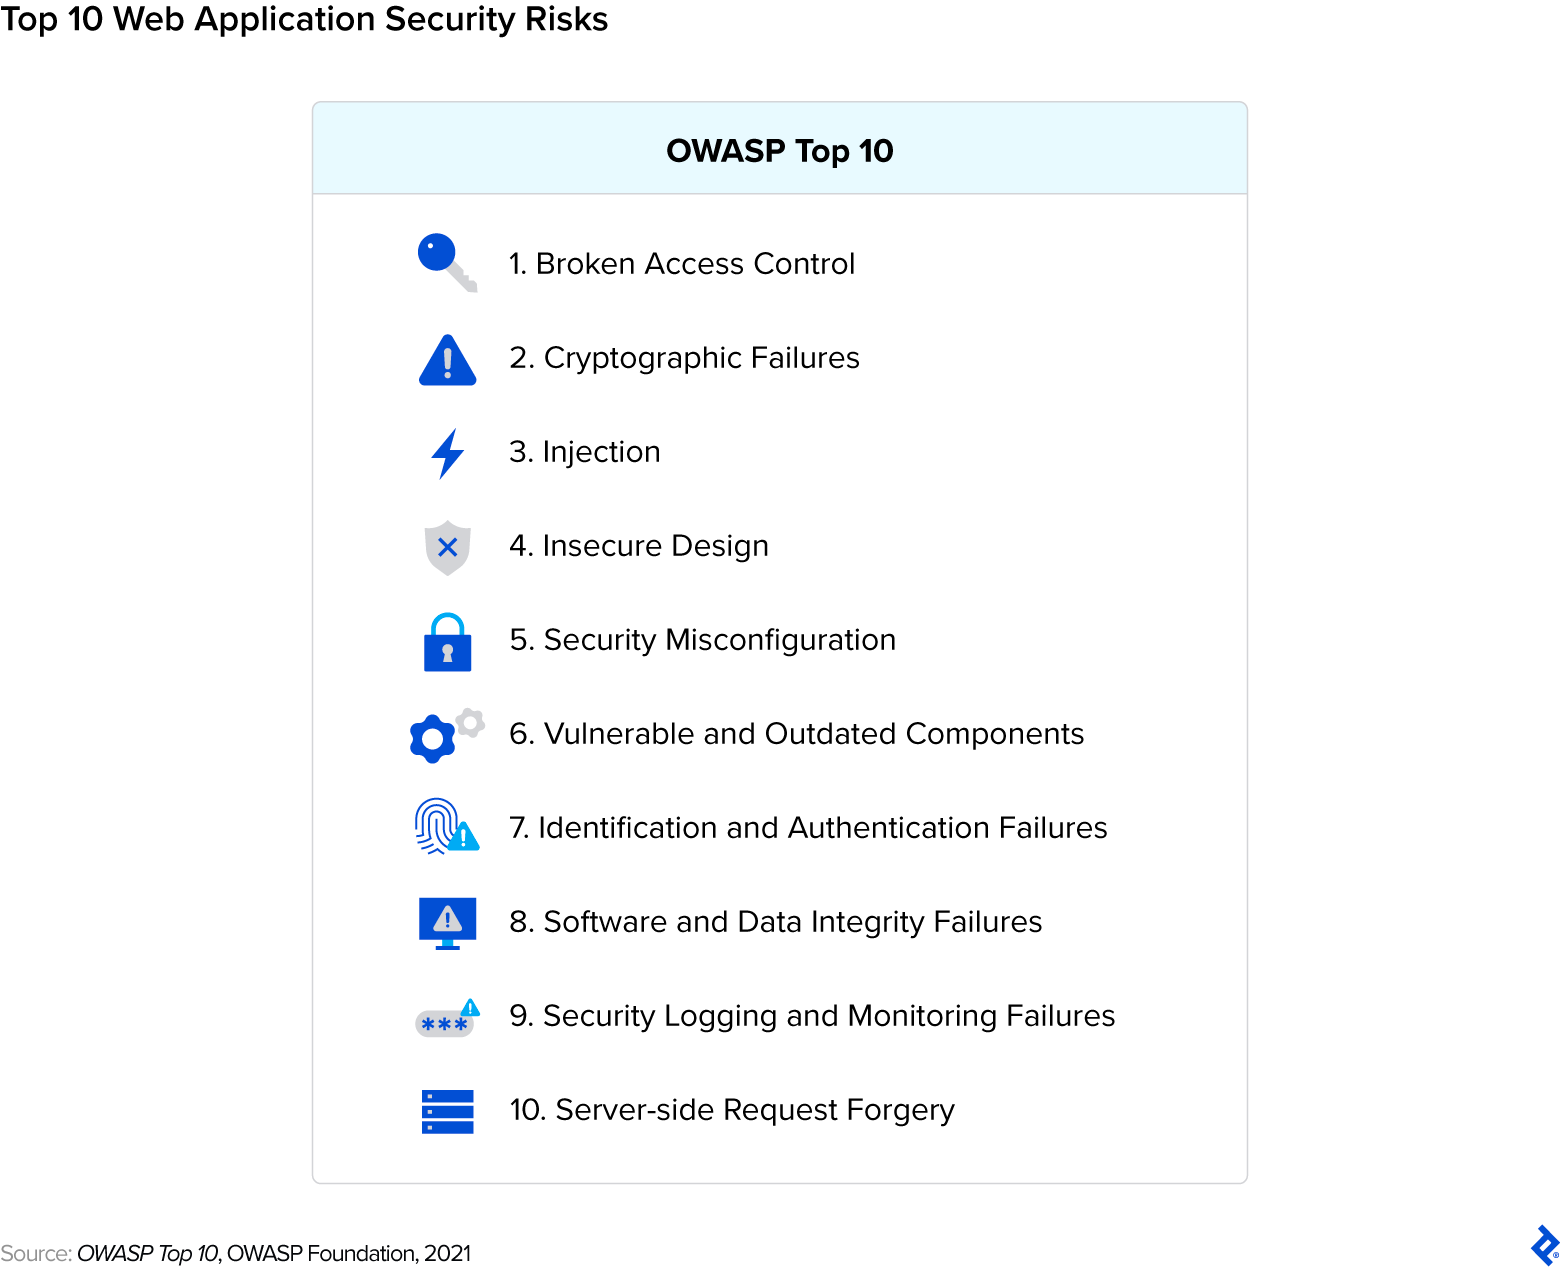 An infographic describing the top 10 web application security risks according to OWASP..